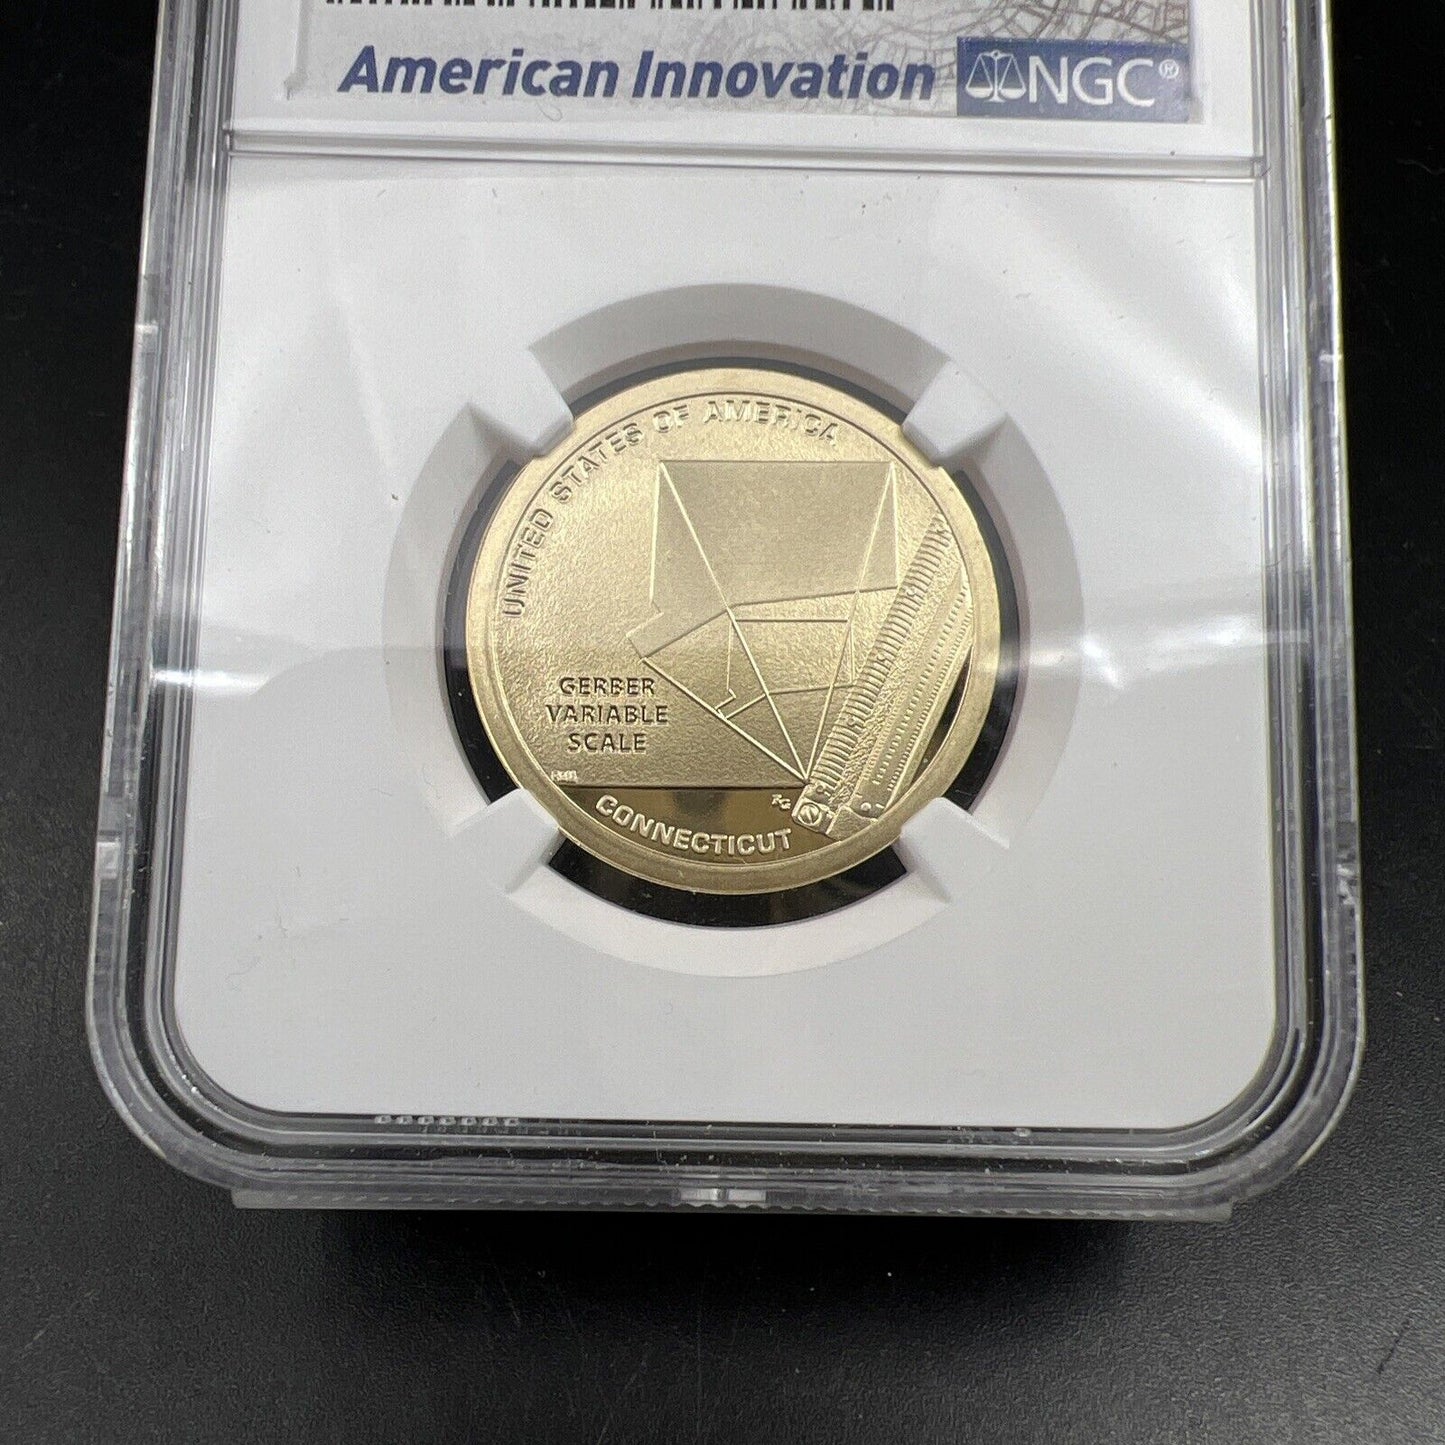 PF70 2020-S American Innovation Commemorative Dollar Gerber Scale NGC UCAM #061